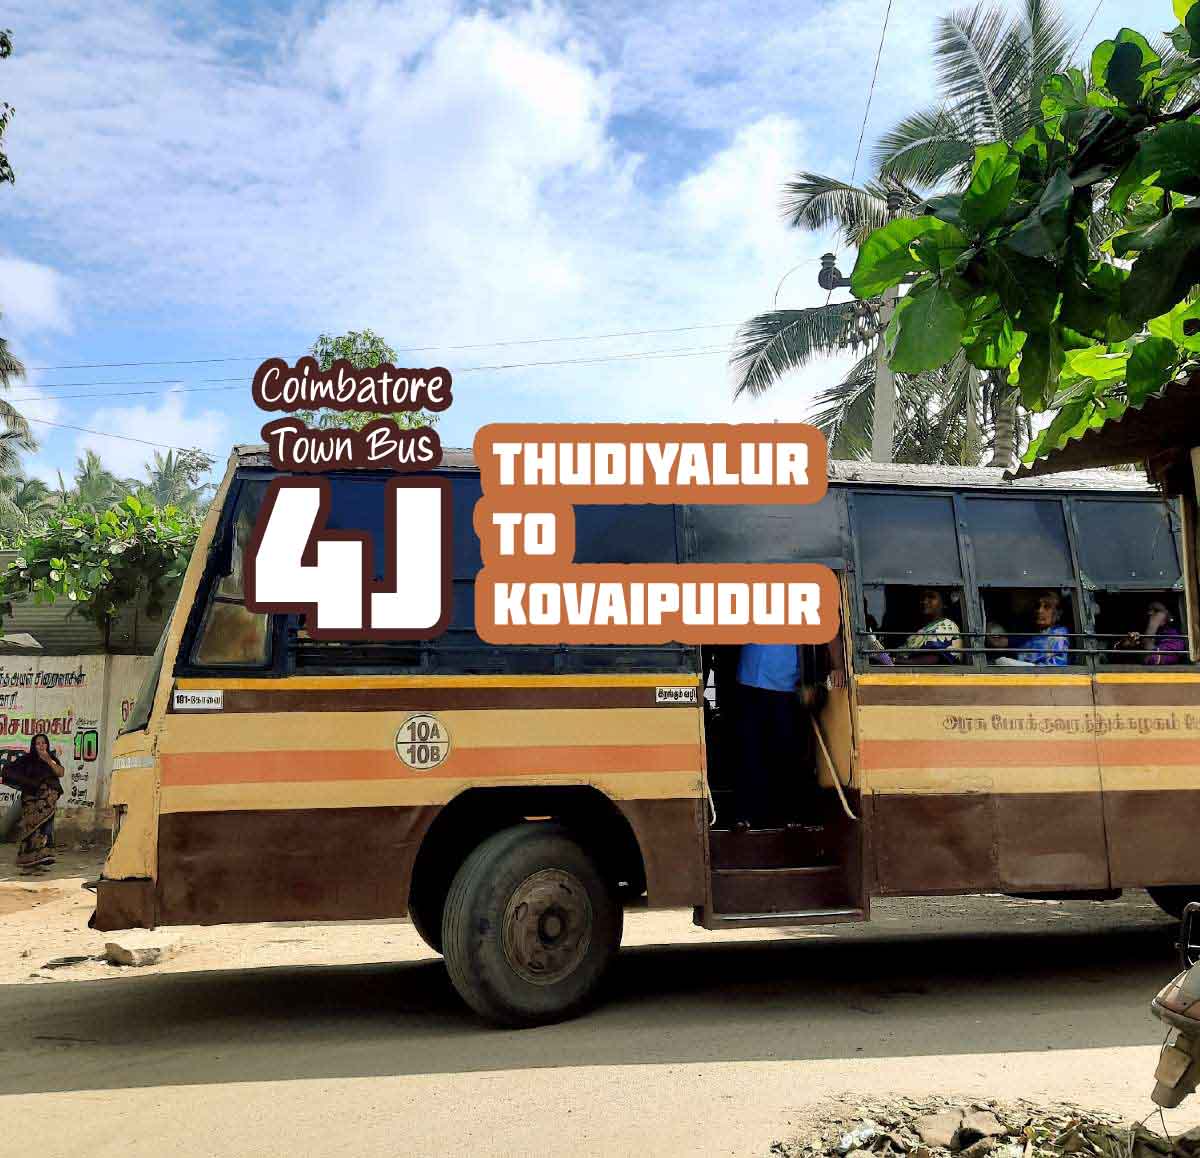 Coimbatore Town Bus Route 4J Thudiyalur to Kovaipudur Bus Timings